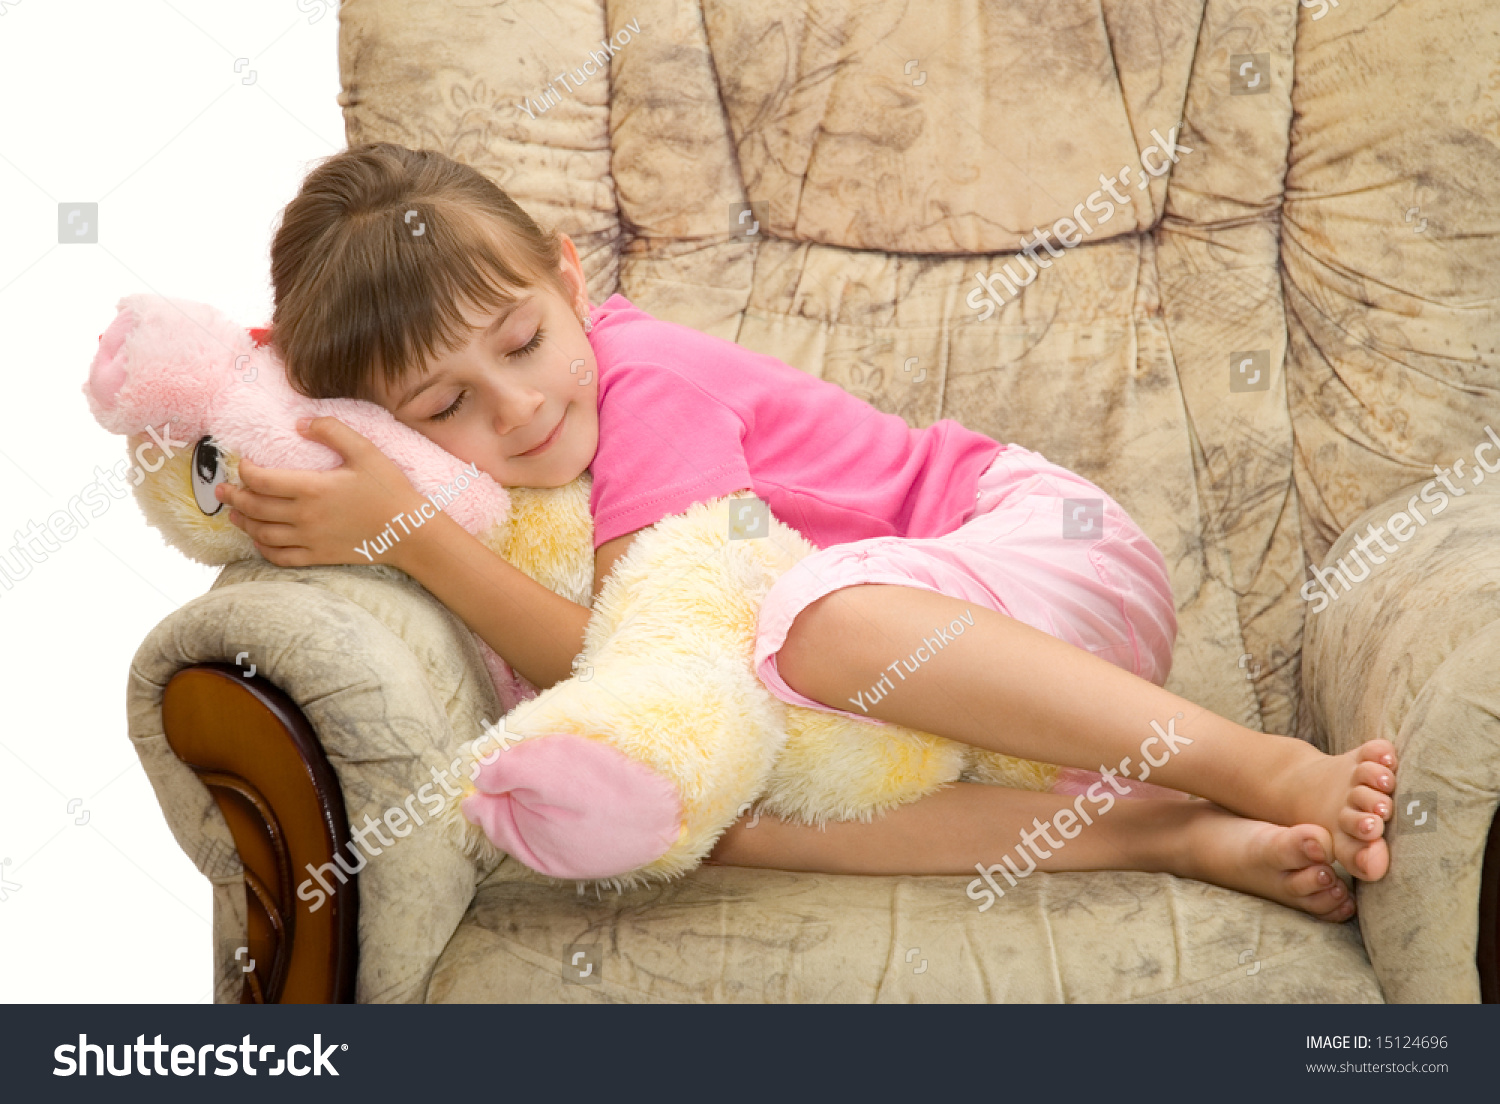 Волшебной игрушкой мастурбирует на диване